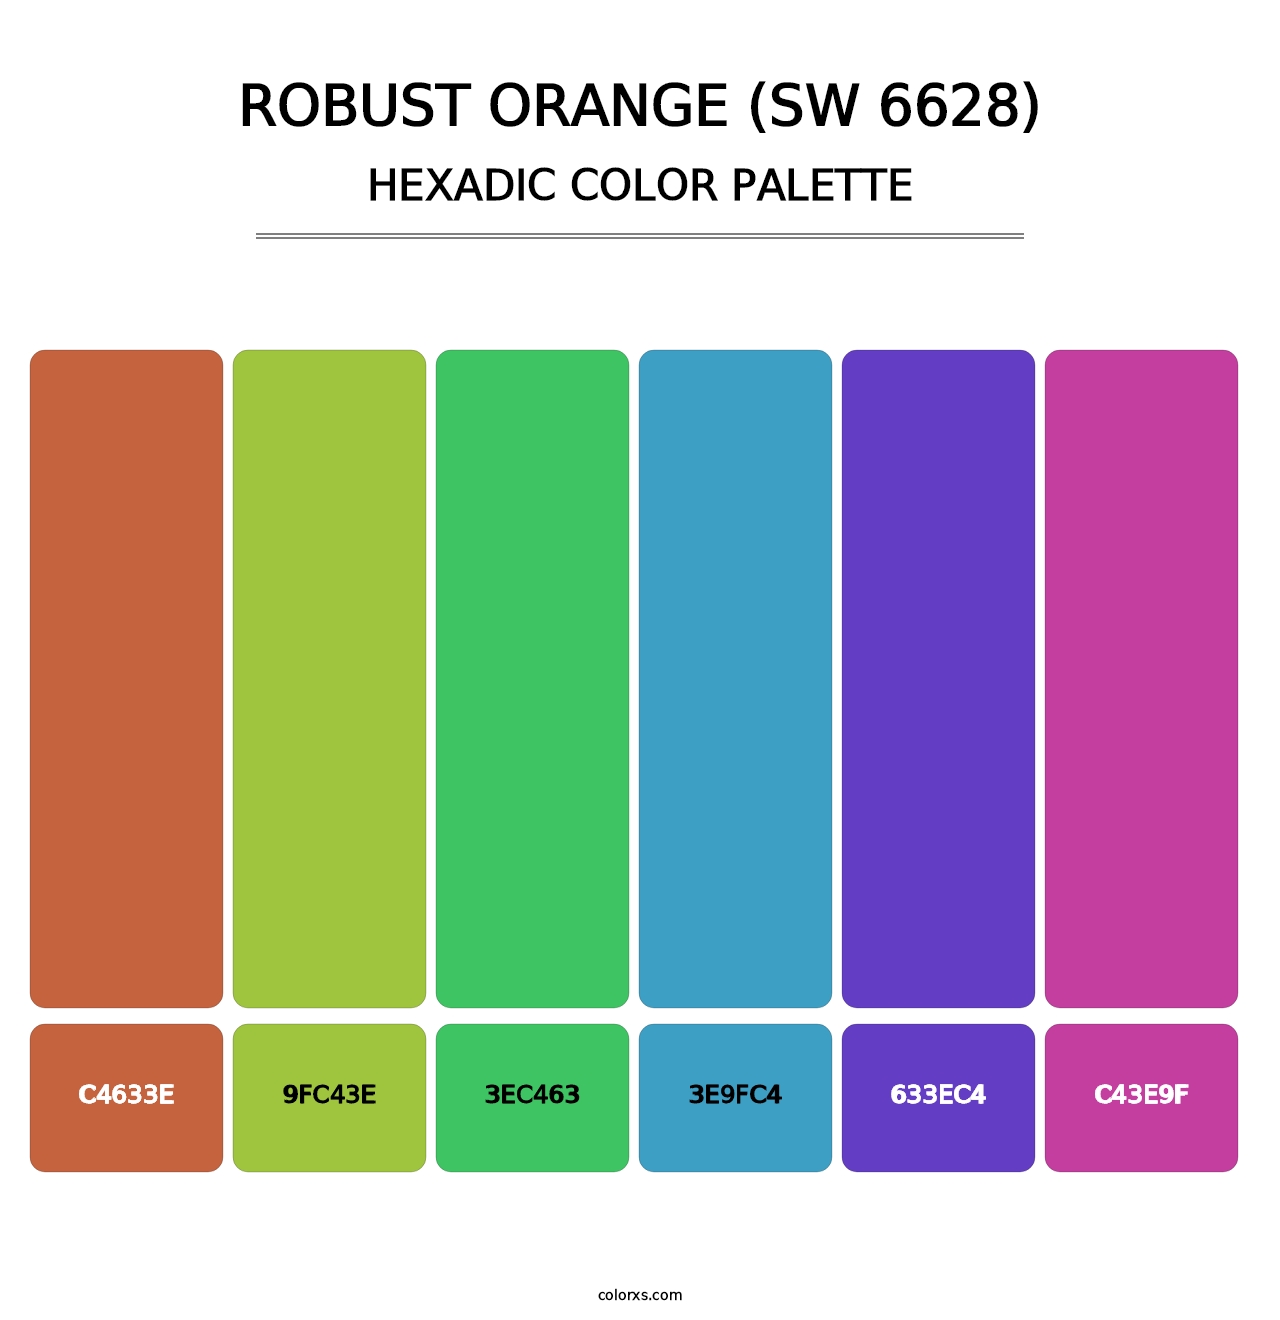 Robust Orange (SW 6628) - Hexadic Color Palette